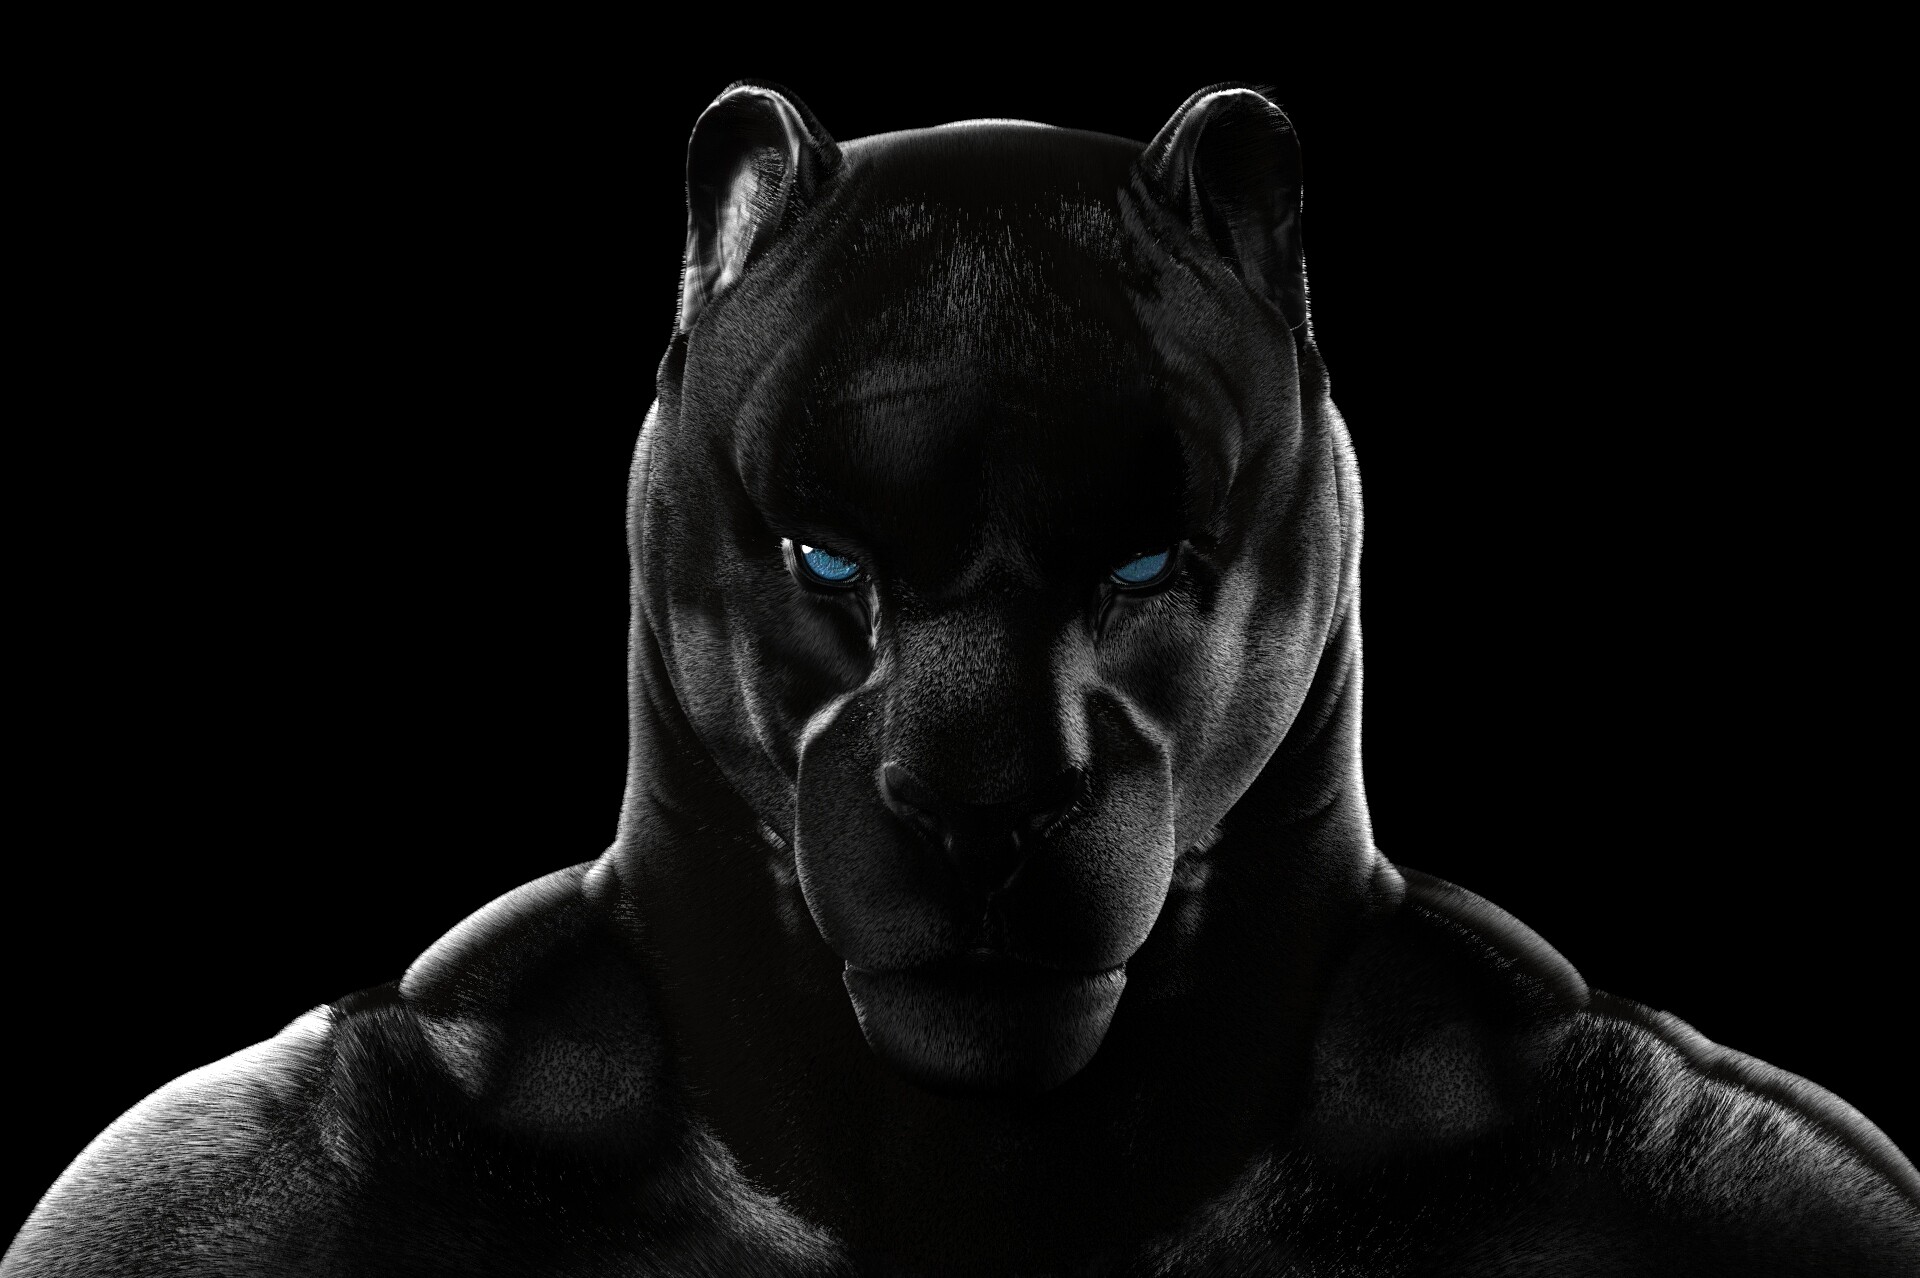 humanoid panther